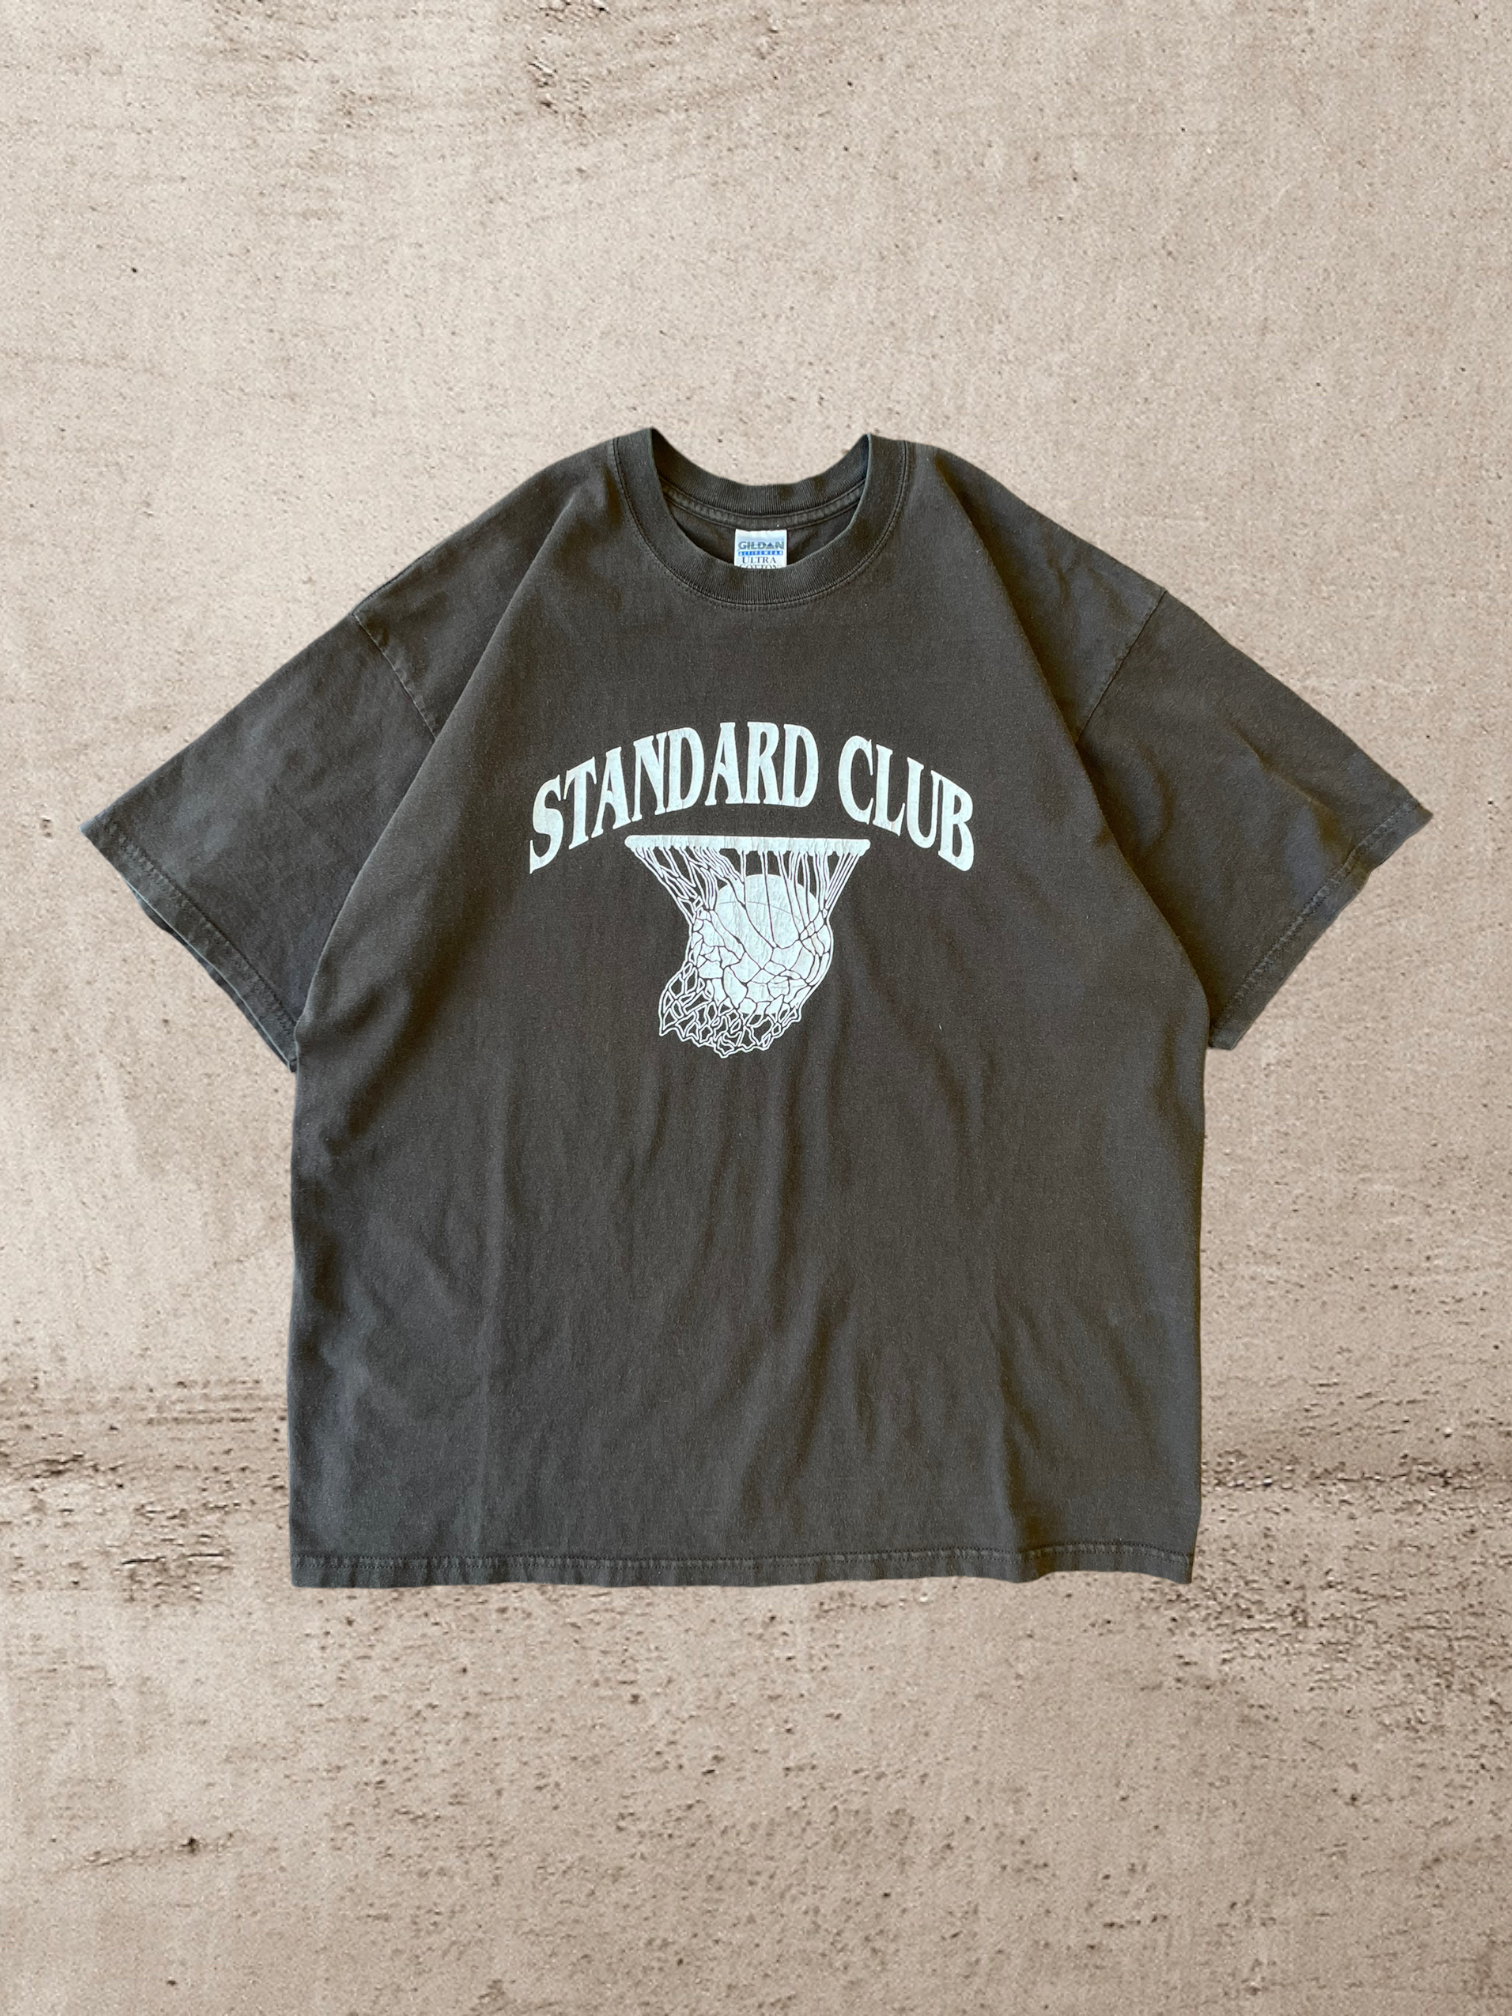 90s Brown Standard Club Basketball T-Shirt - XL